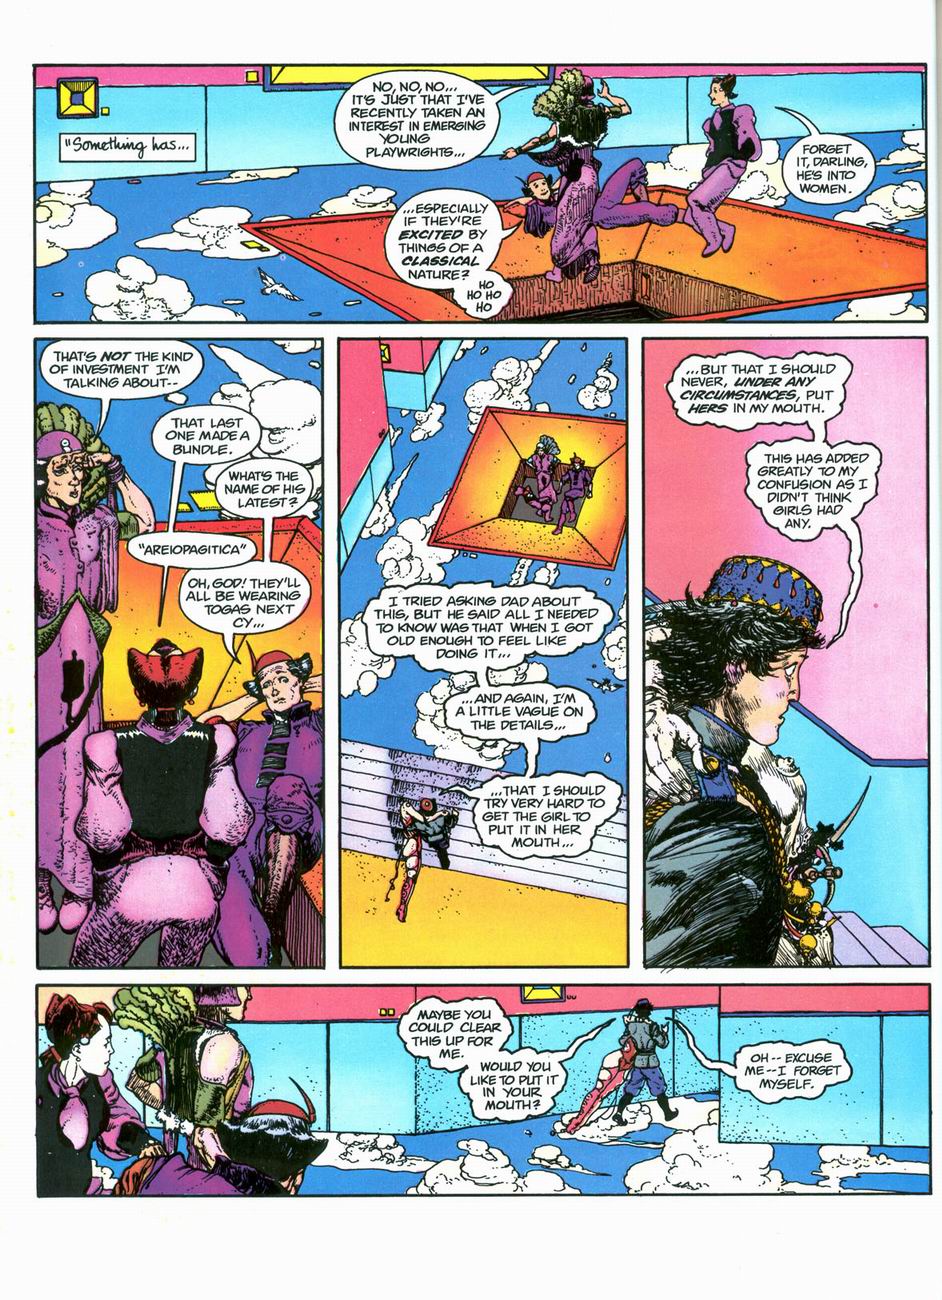 Marvel Graphic Novel issue 13 - Starstruck - Page 15